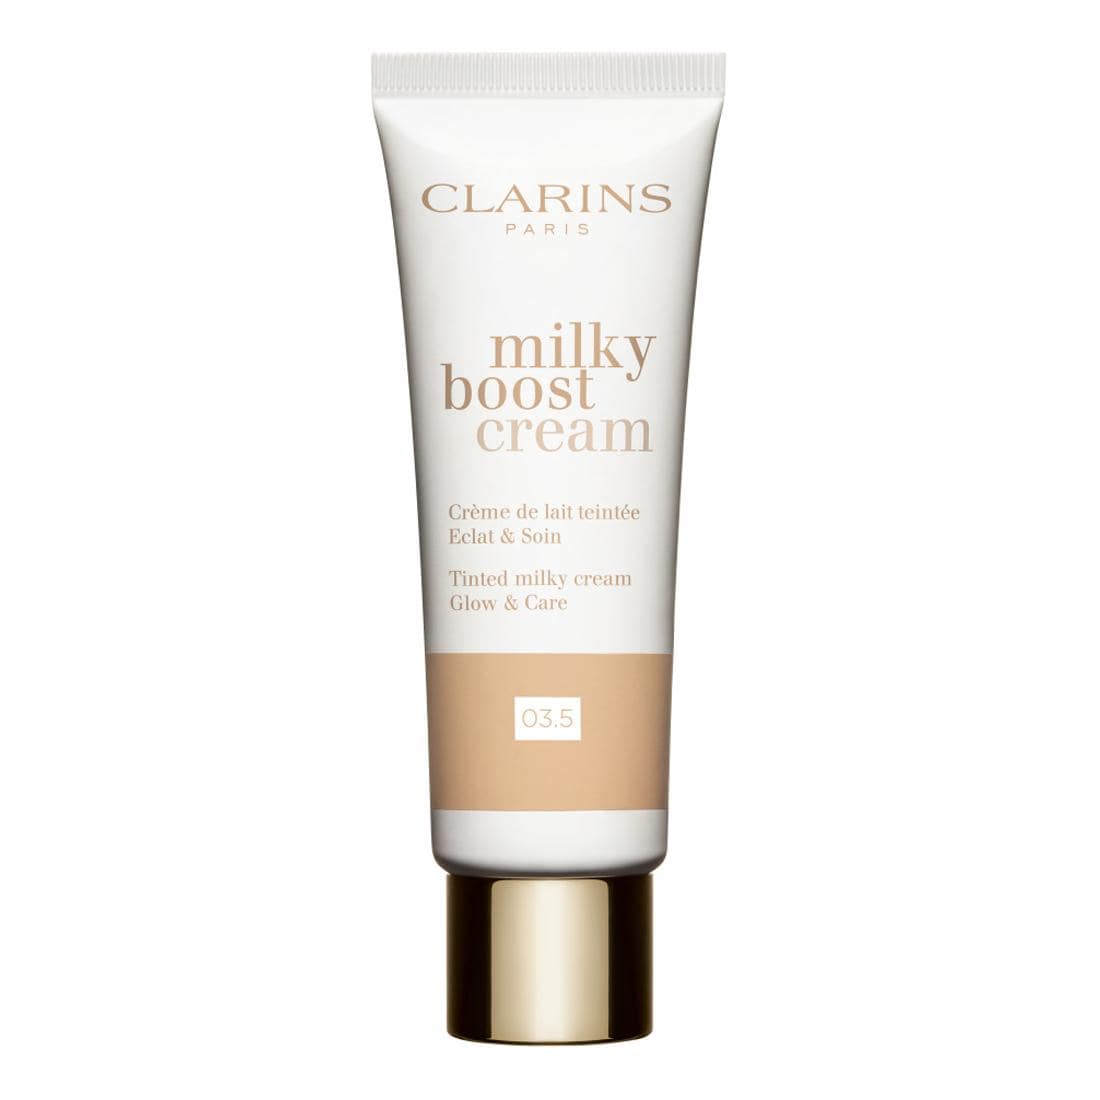 Clarins Milky Boost Cream,03.5 milky honey